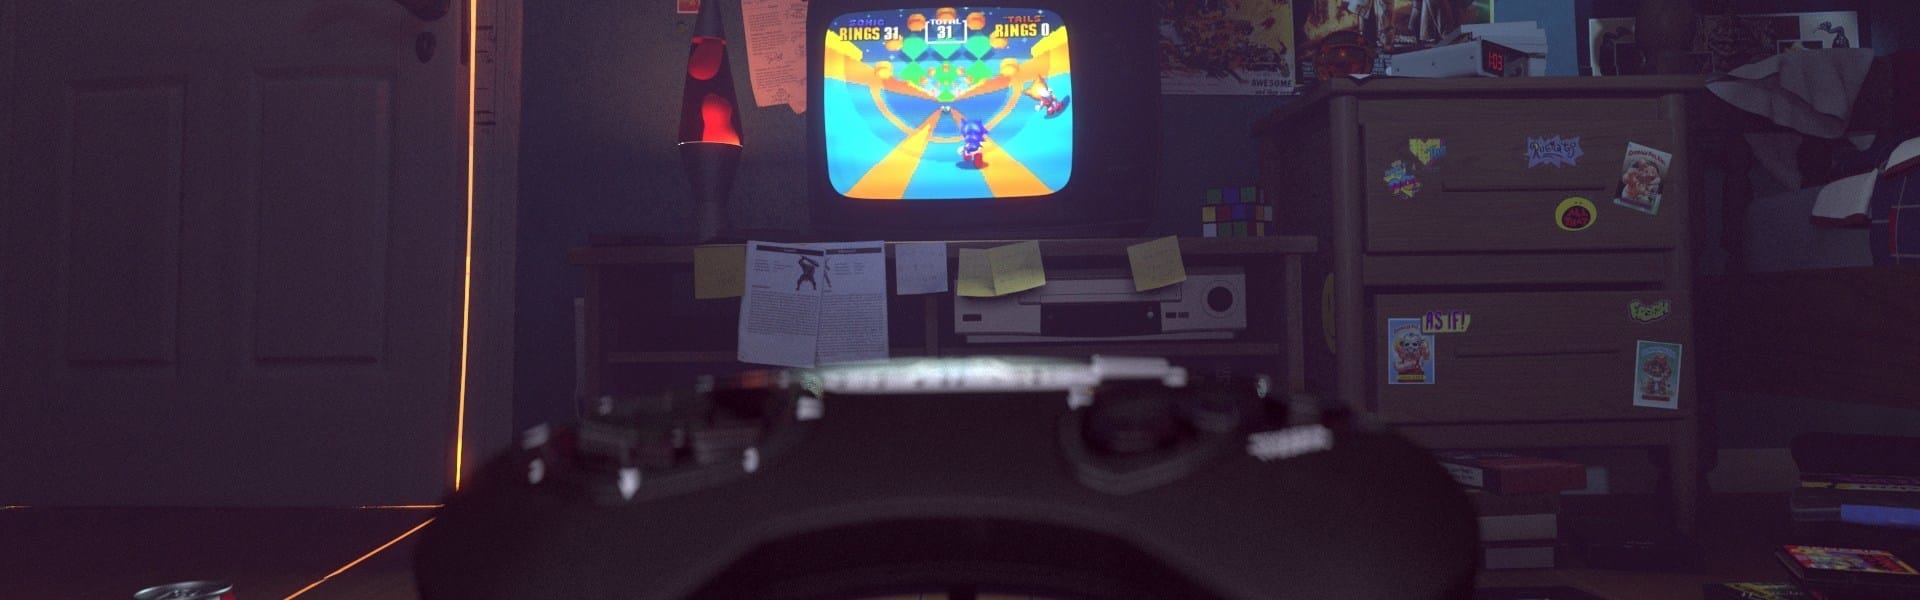 Sega Megadrive controller and Sonic the Hedgehog 2 in dark room